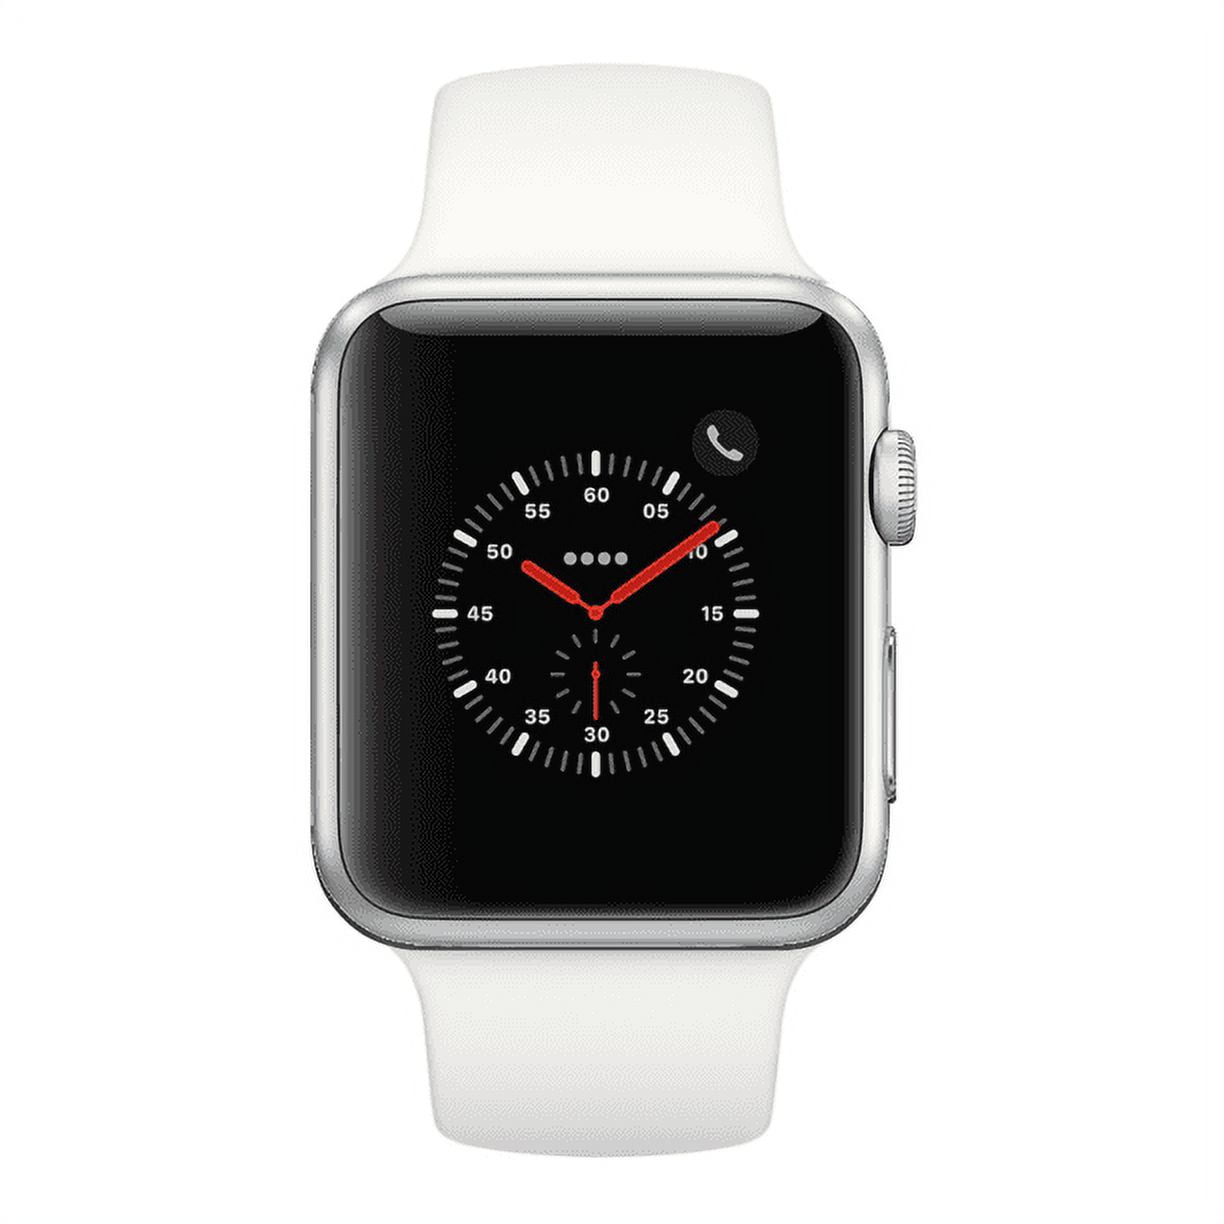 【即納品】Applewatch series3 Silver Aluminum 42mm Apple Watch本体